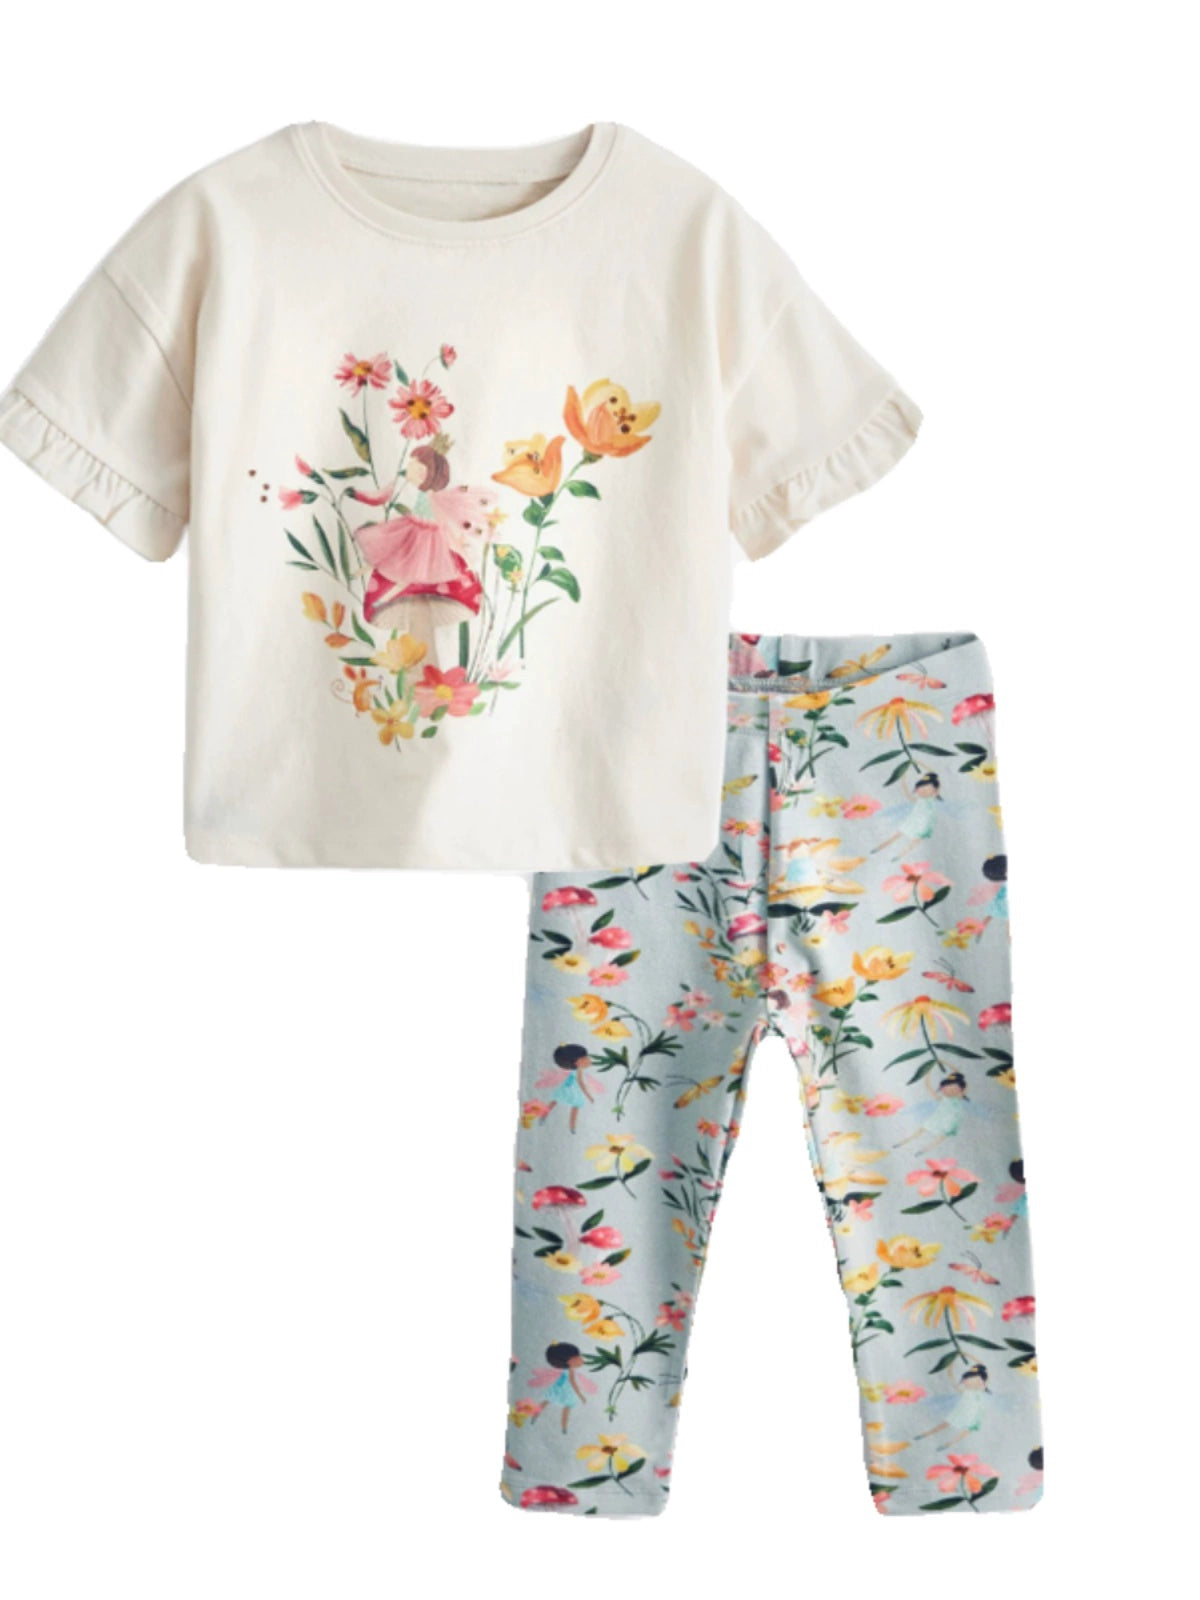 Floral set t-shirt and leggings